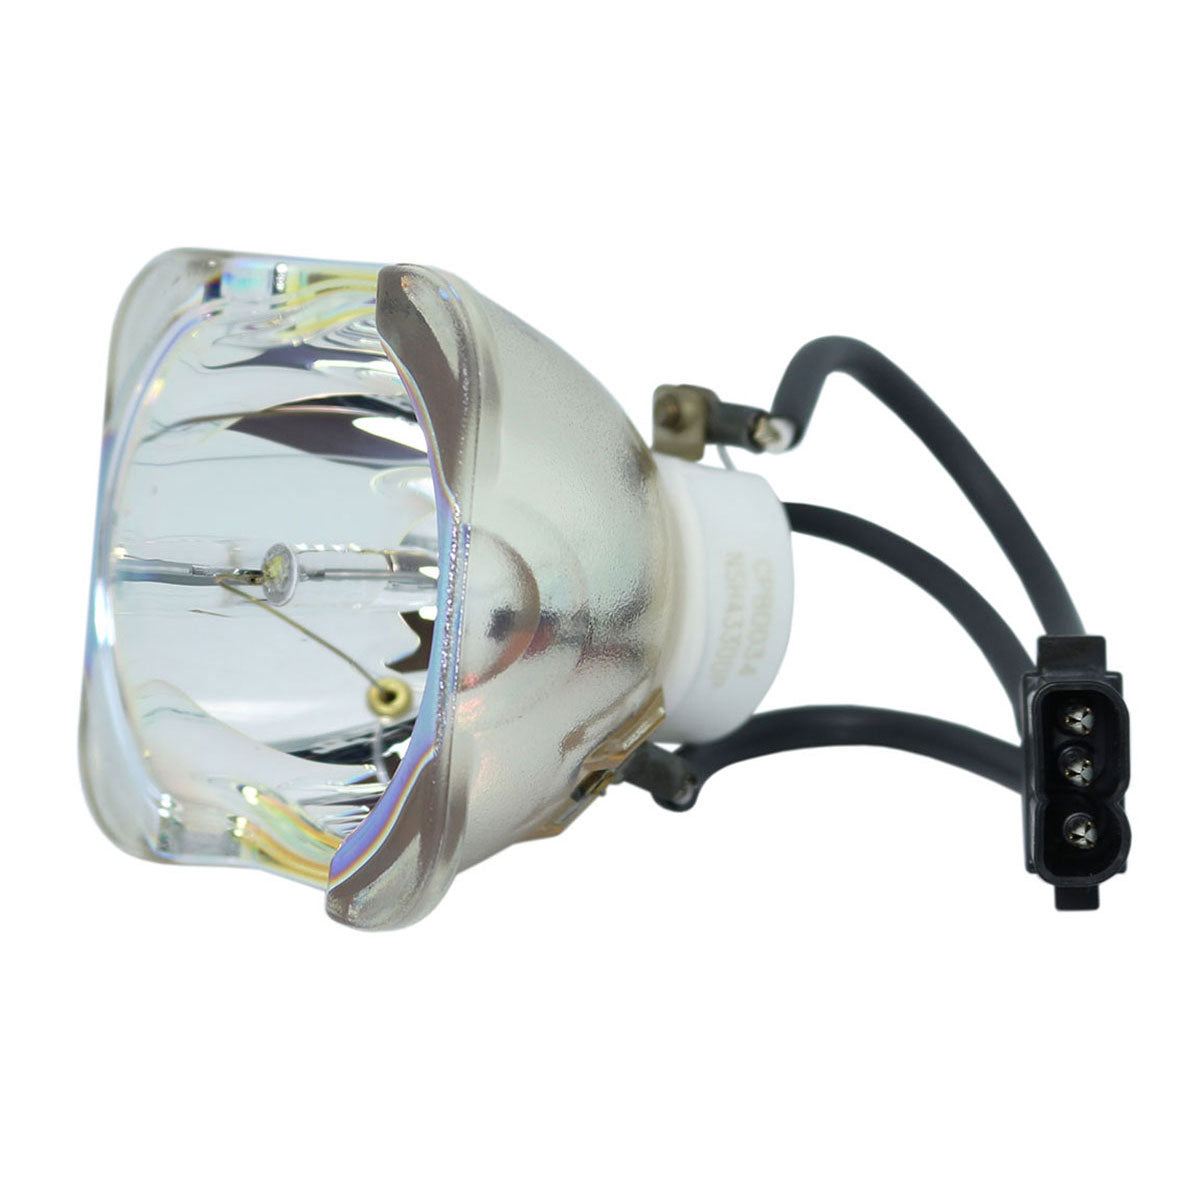 ASK Proxima 420009500 Ushio Projector Bare Lamp